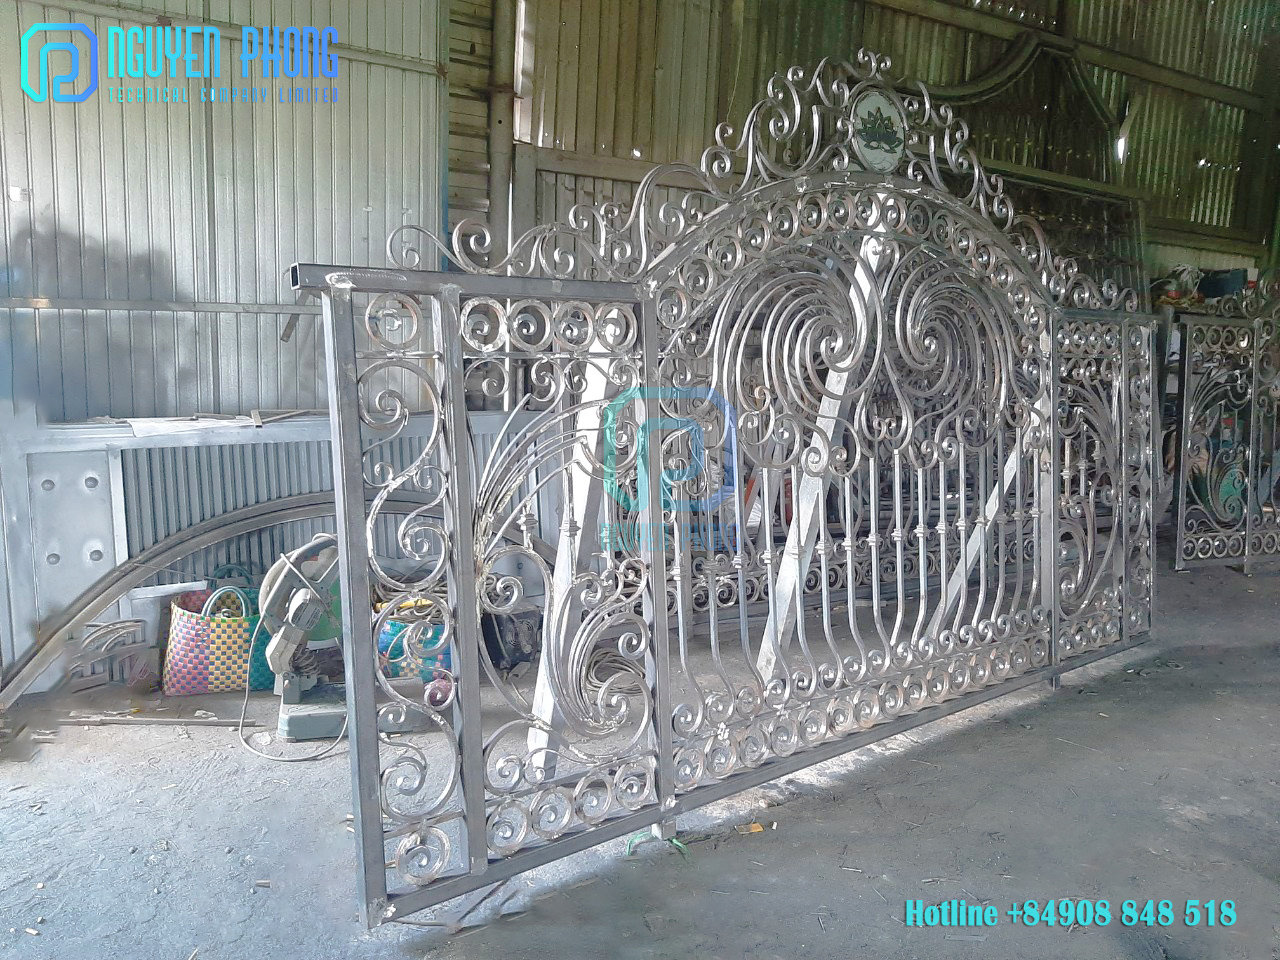 wrought-iron-fence-garden-fence-metal-fence-metal-art-factory-2.jpg